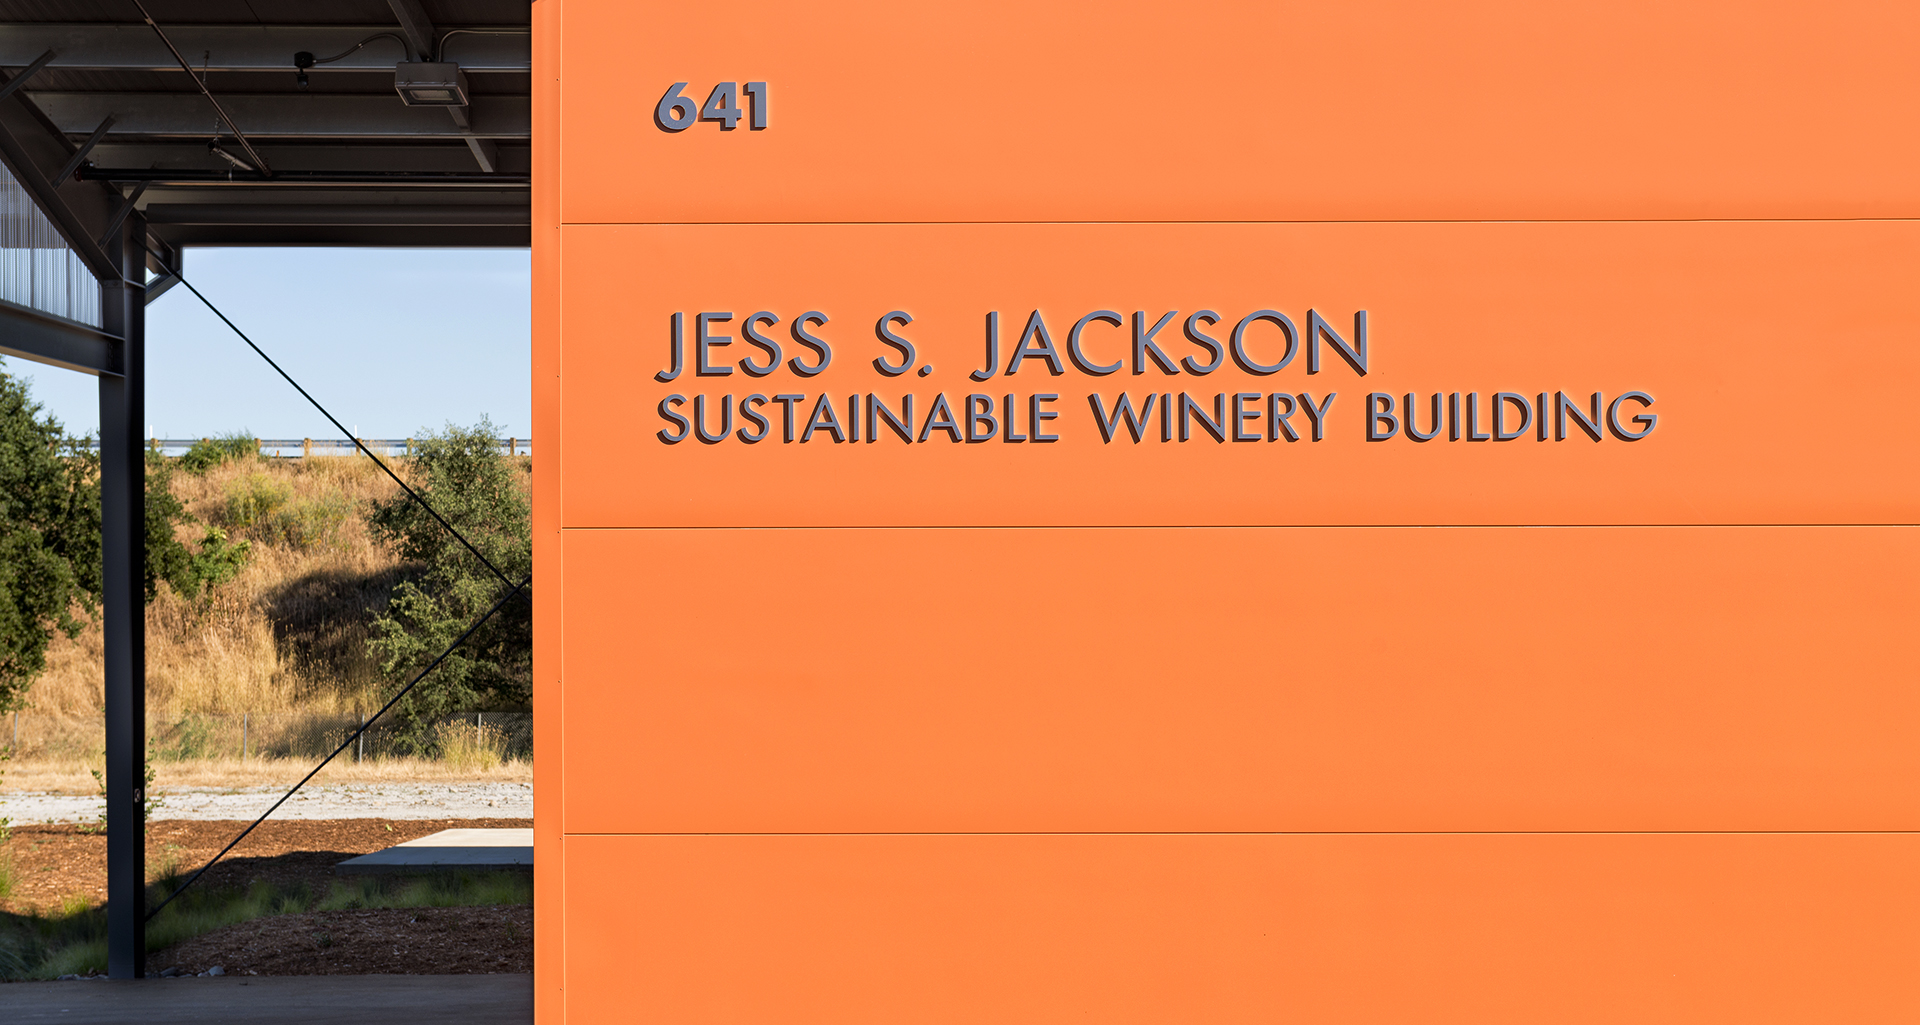 Jess S. Jackson Sustainable Winery Building | Photos by Jasper Sanidad